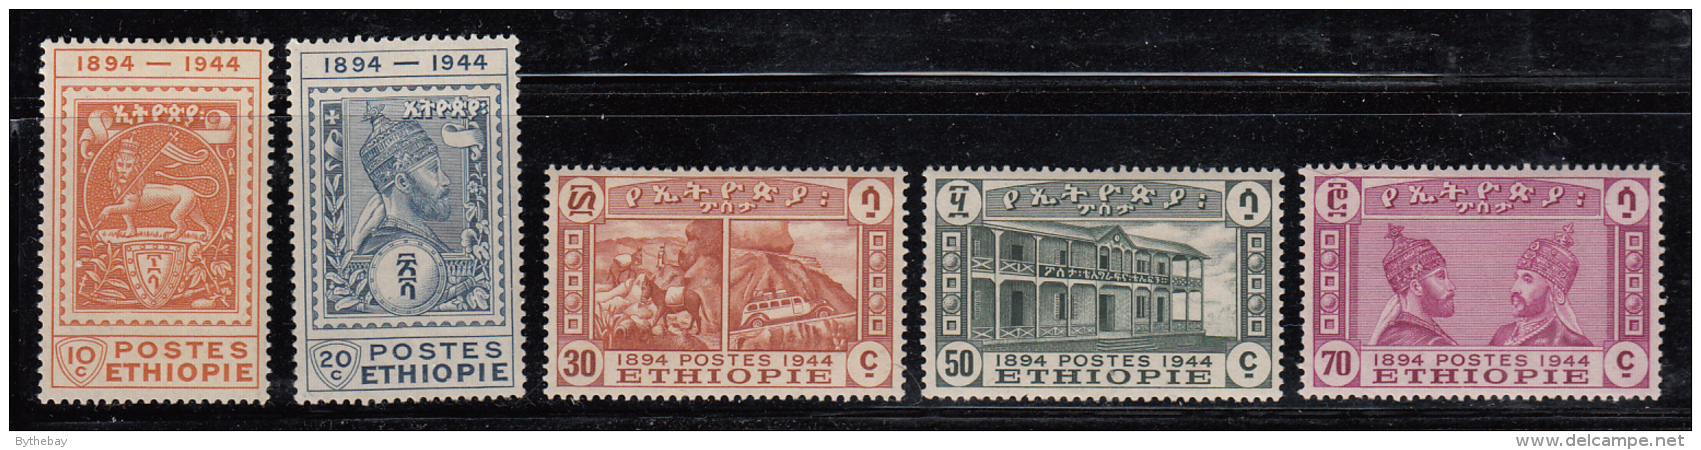 Ethiopia 1947 MH Scott #273-#277 Set Of 5 50th Anniv Postal Service - Ethiopië